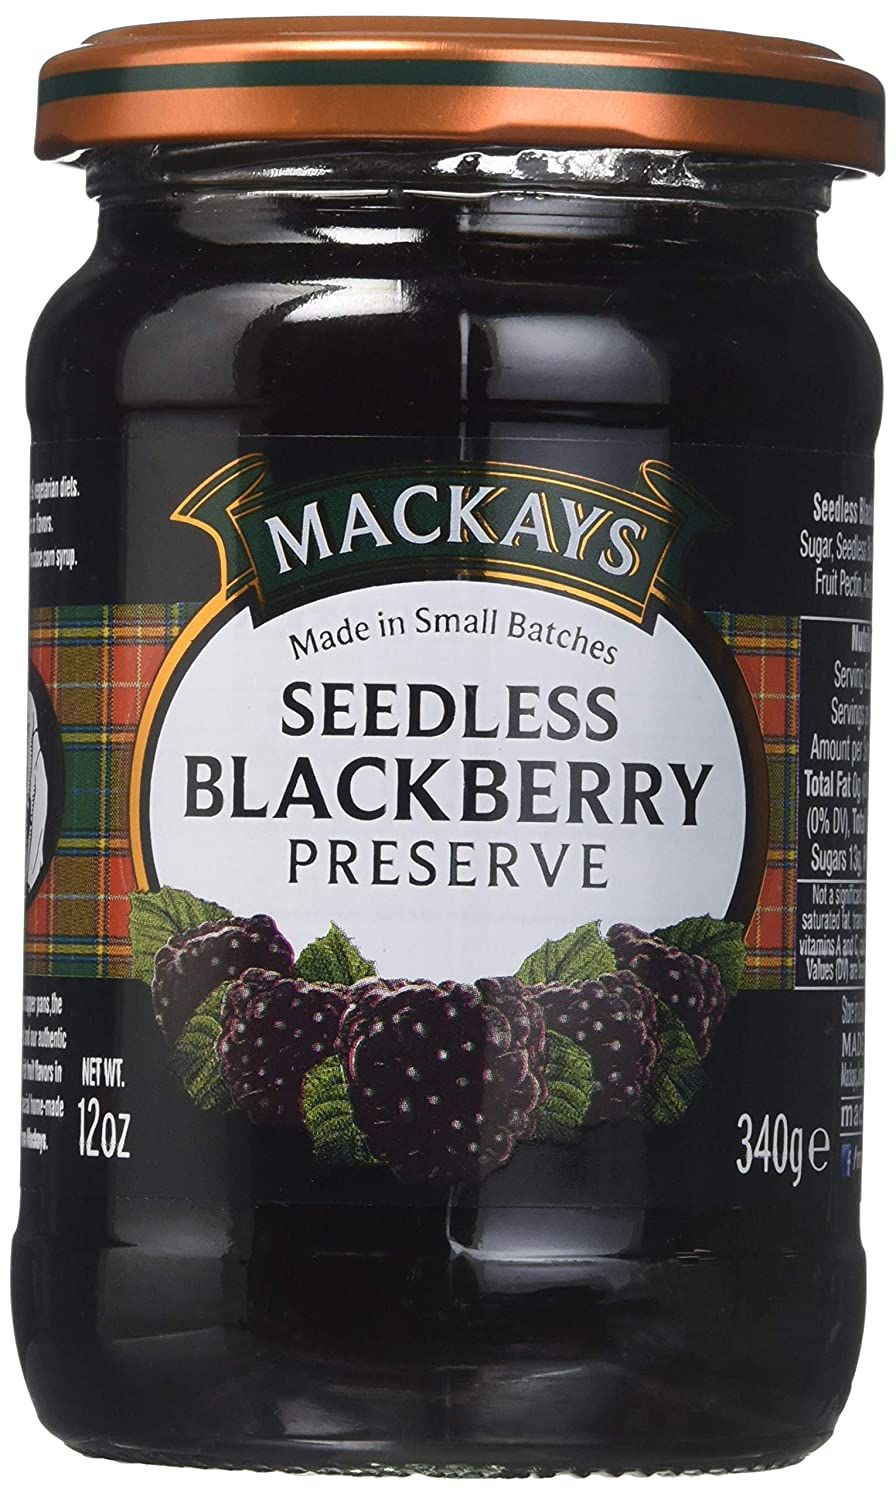 Mackays Seedless Blackberry Preseve Image